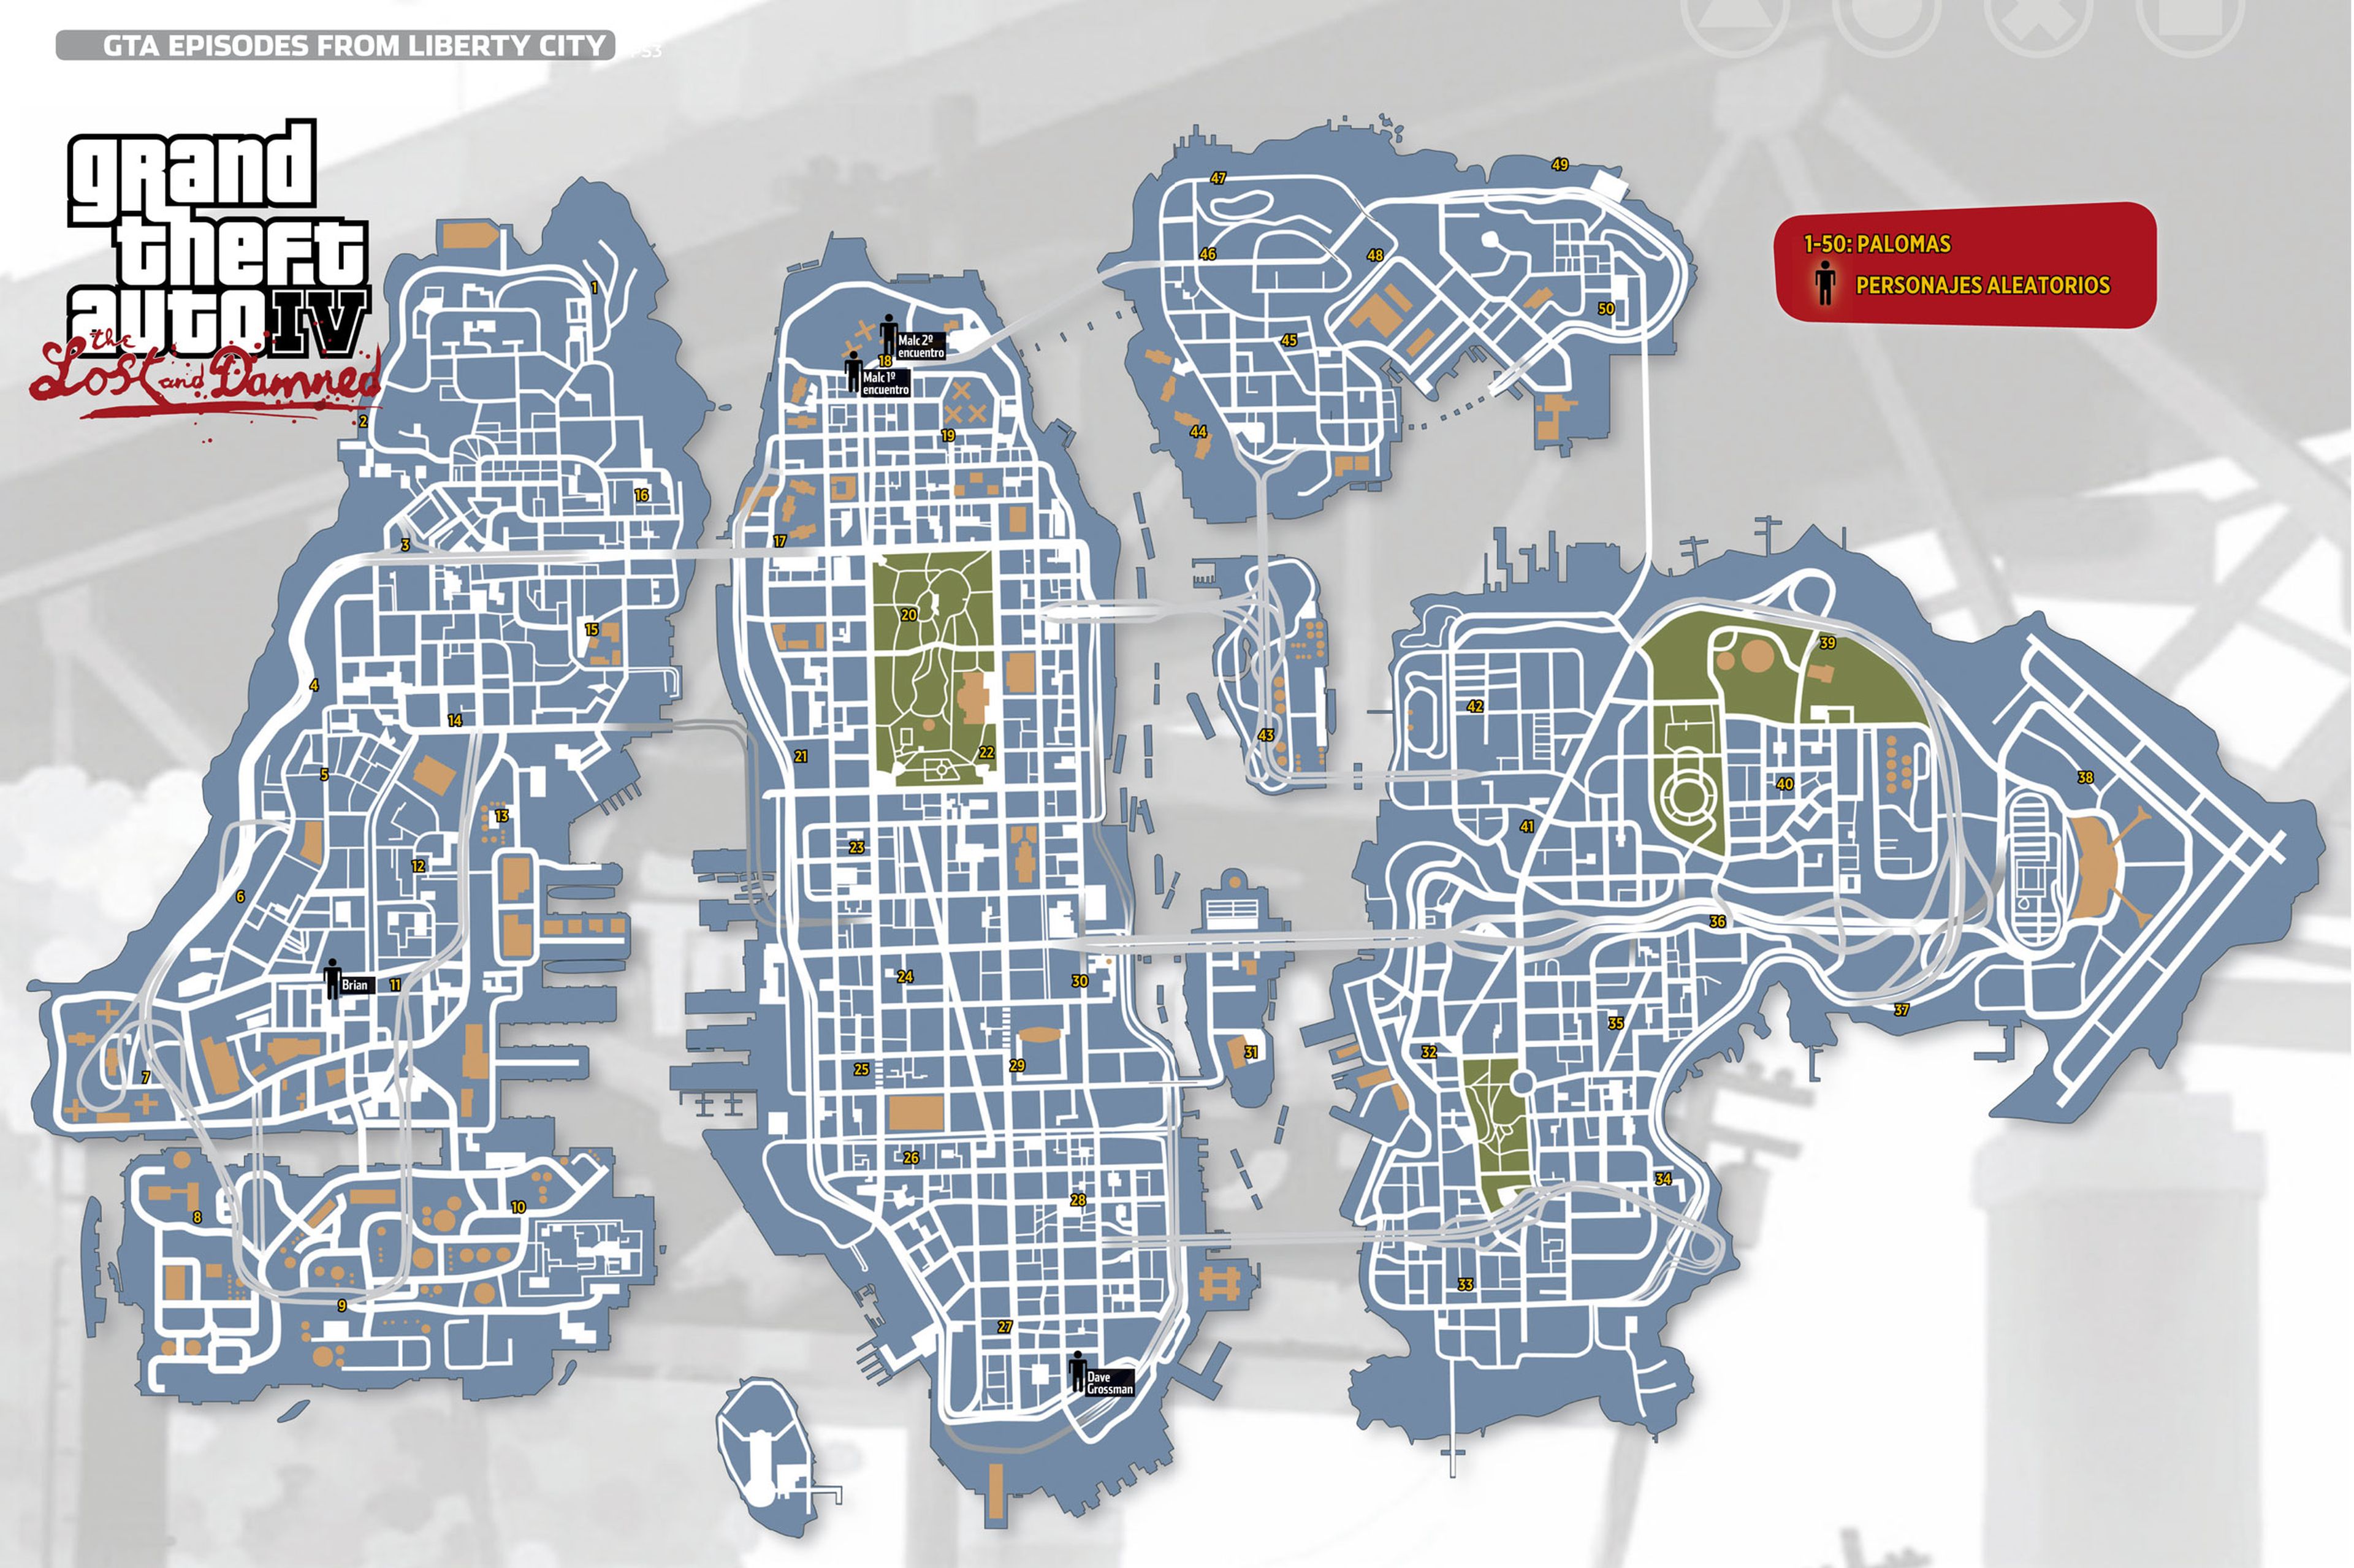 GTA IV Episodes from Liberty City Mapas